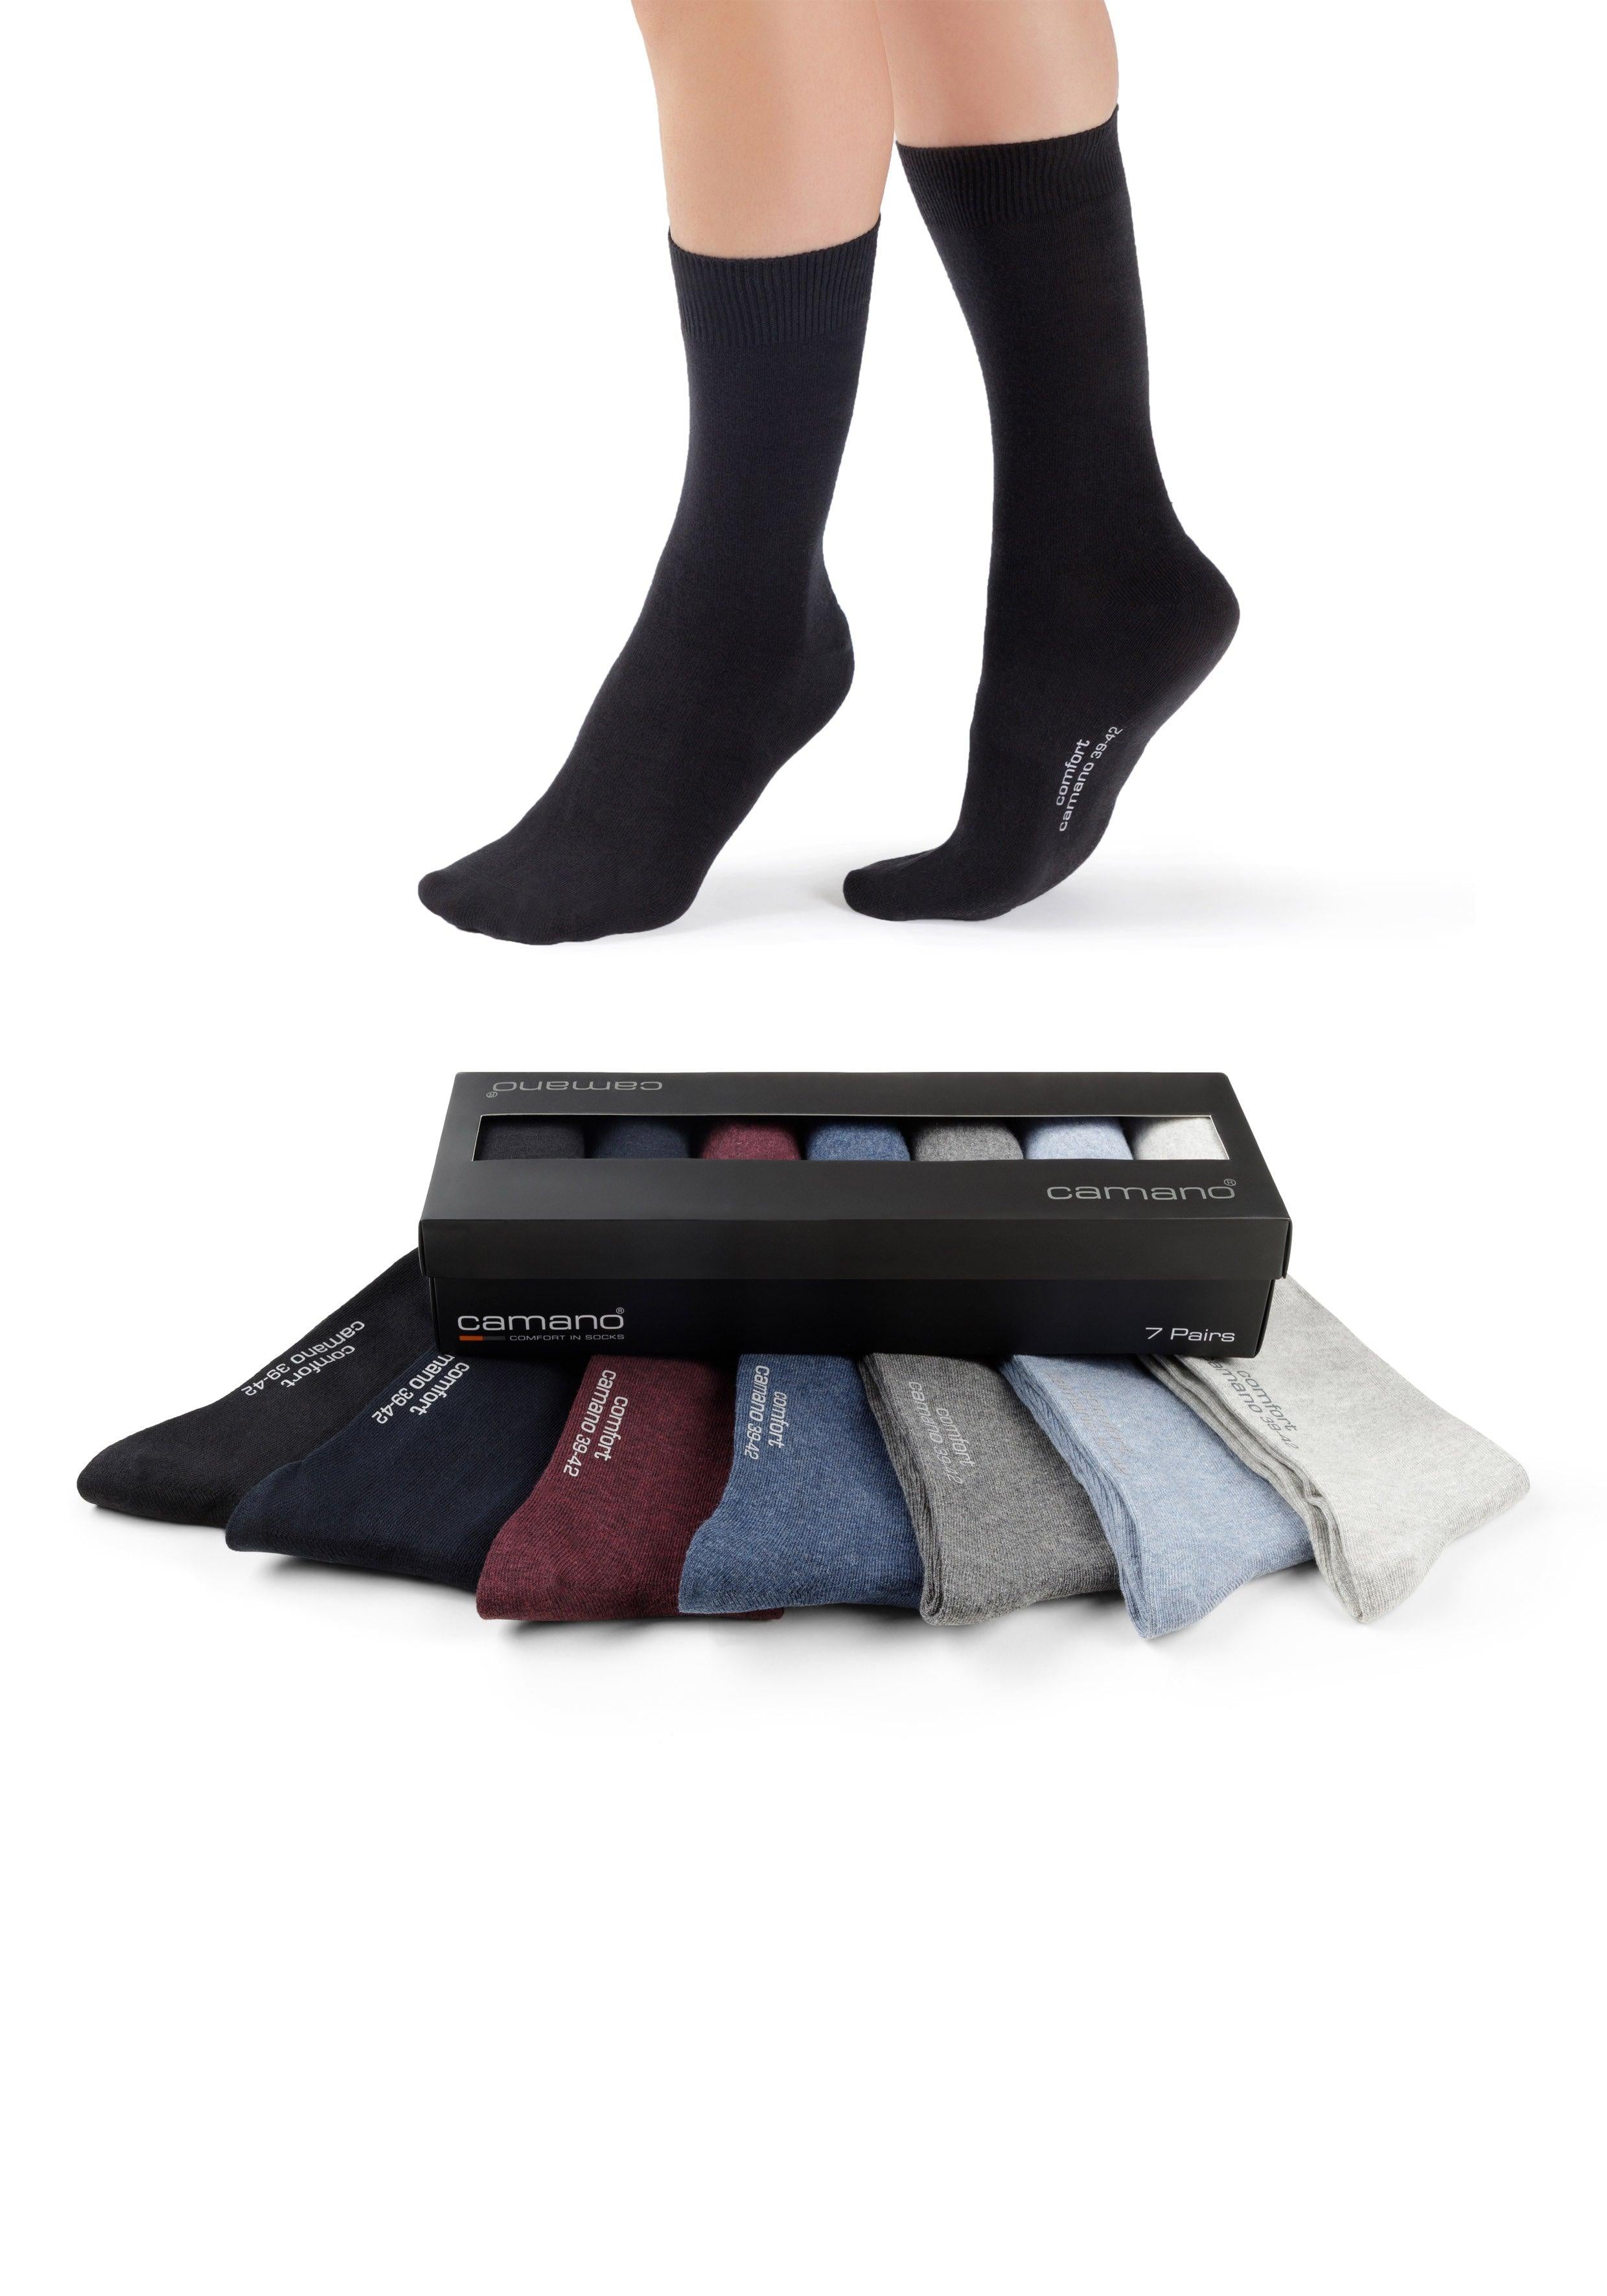 Socken comfort 7er Pack in der Geschenk-Box – ONSKINERY